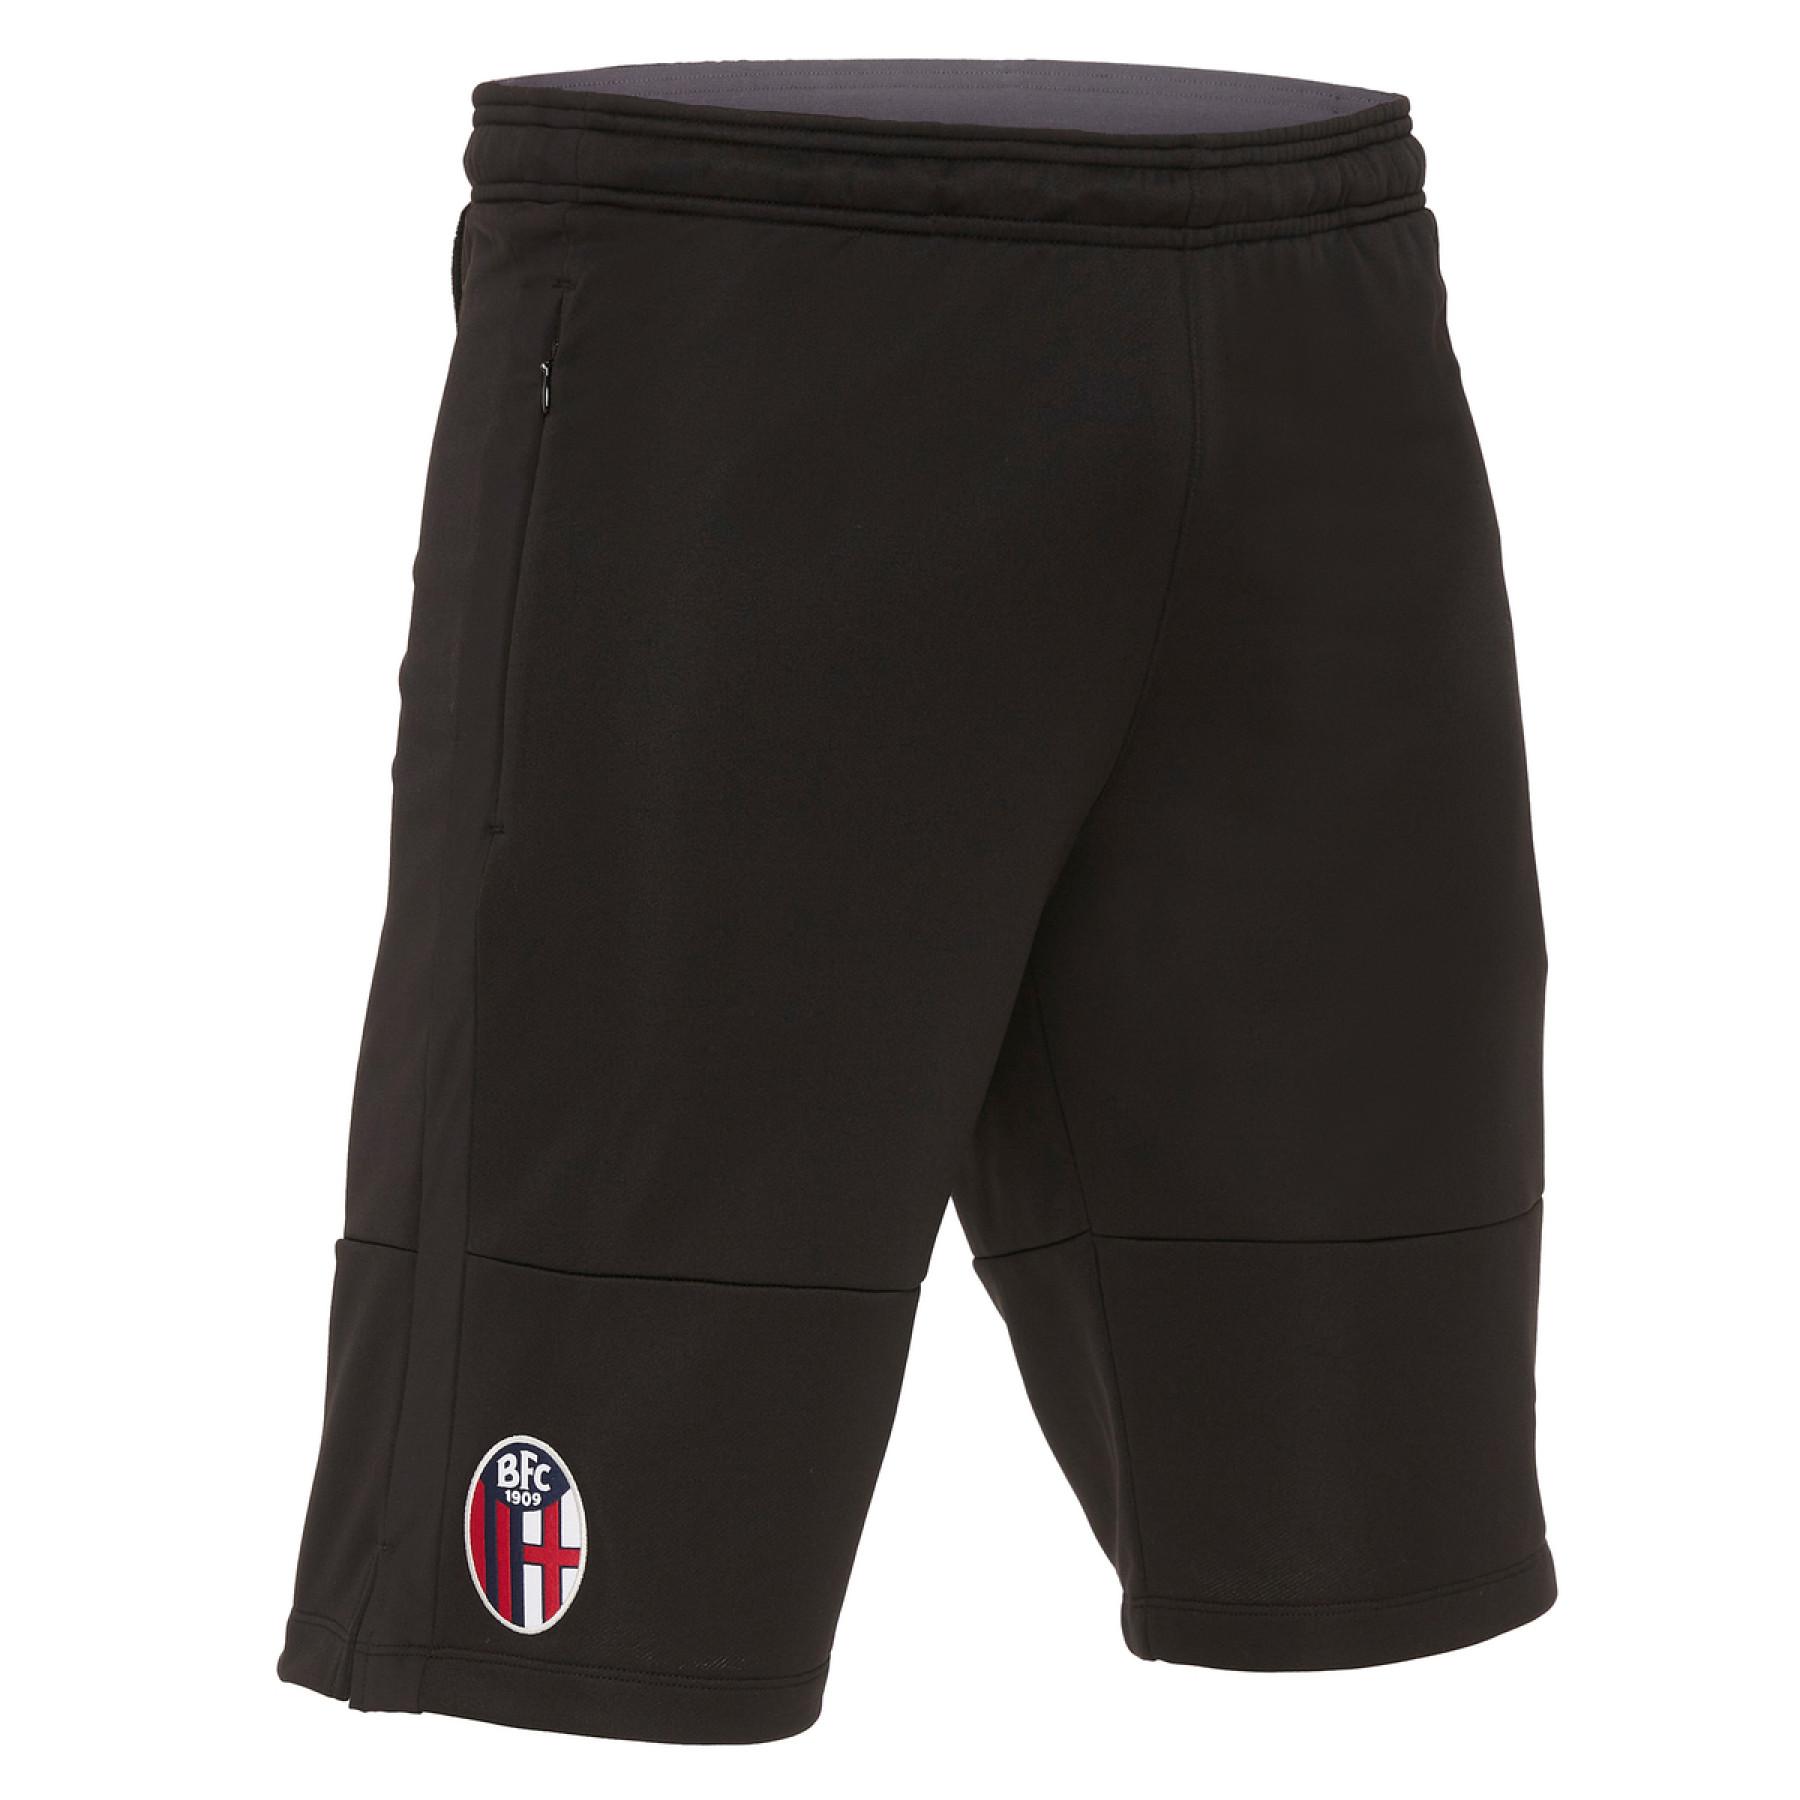 Pantalones cortos de viaje Bologne 2020/21